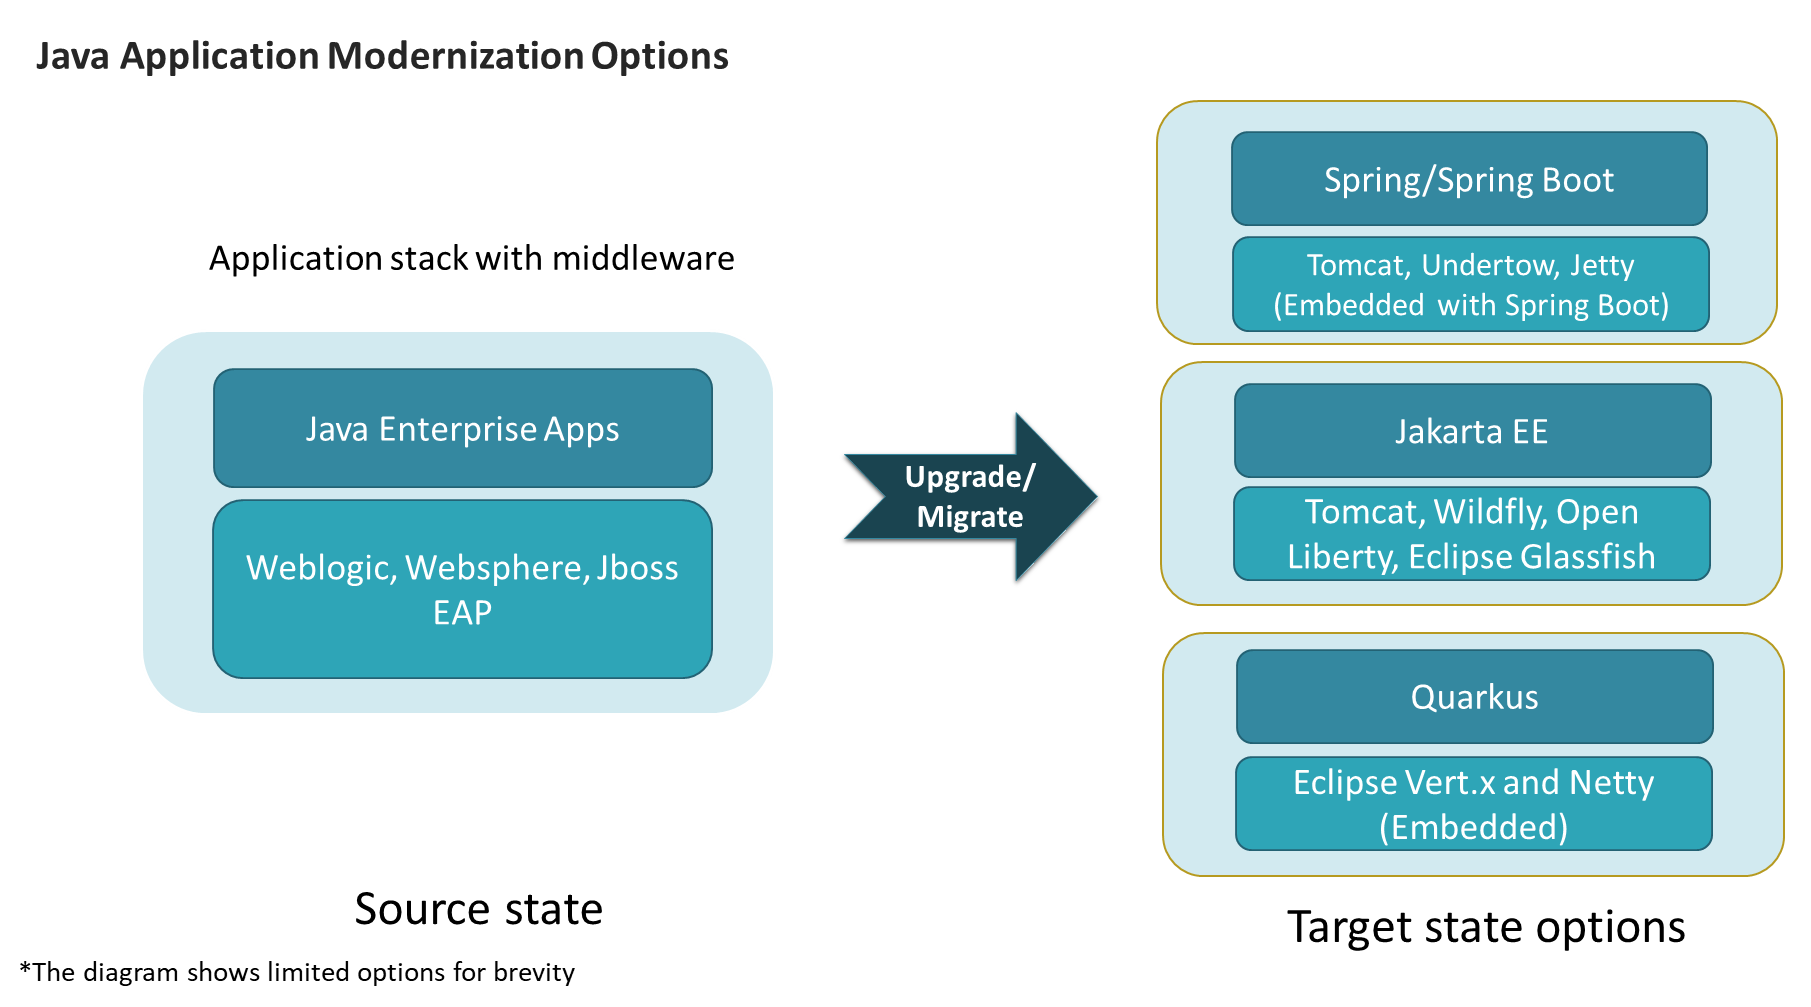 Java Application Modernization Options